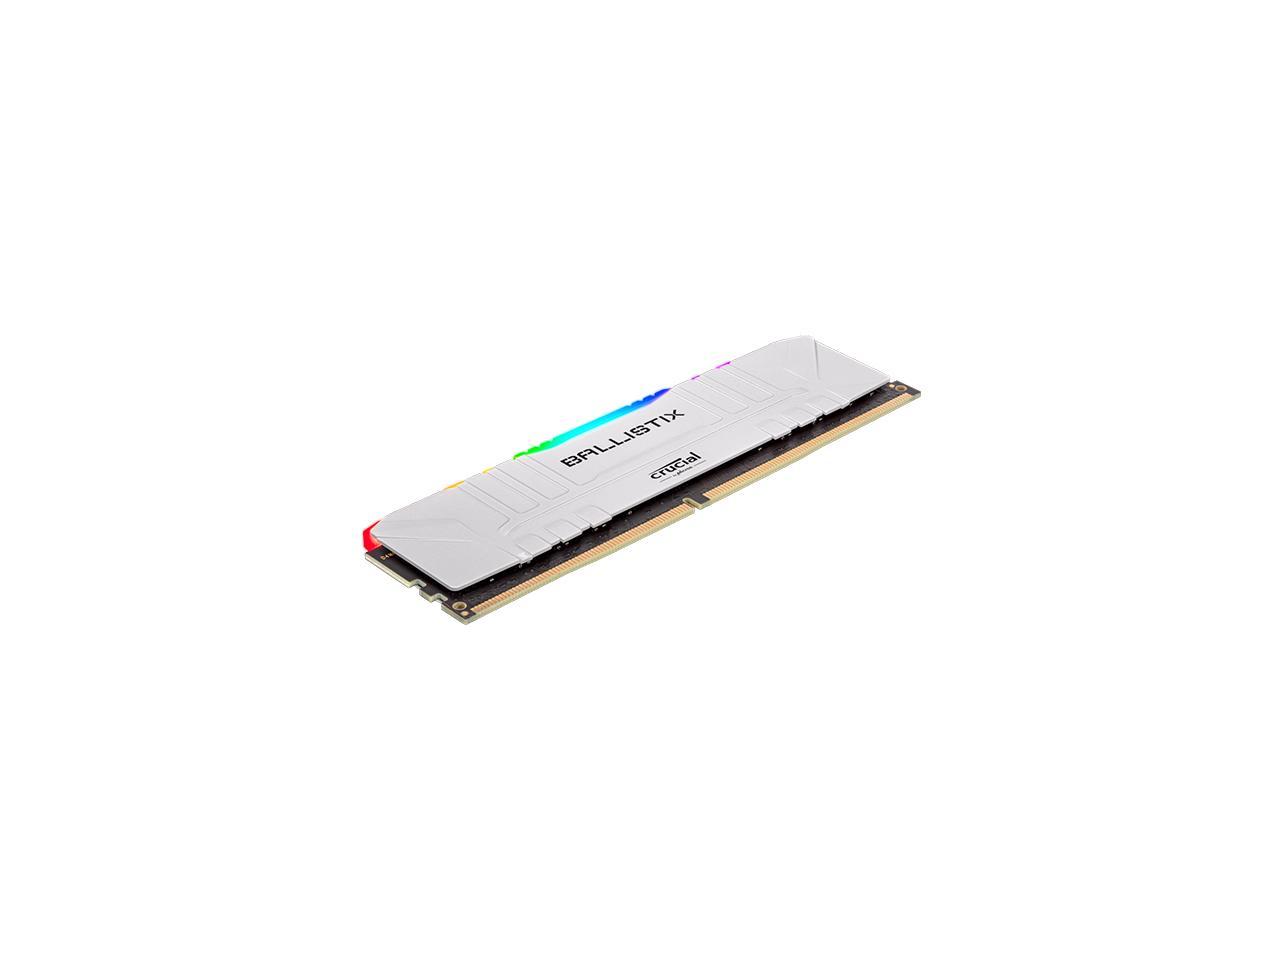 Crucial Ballistix RGB 32GB (2 x 16GB) 288-Pin DDR4 SDRAM DDR4 3200 (PC4 25600) Desktop Memory Model BL2K16G32C16U4WL